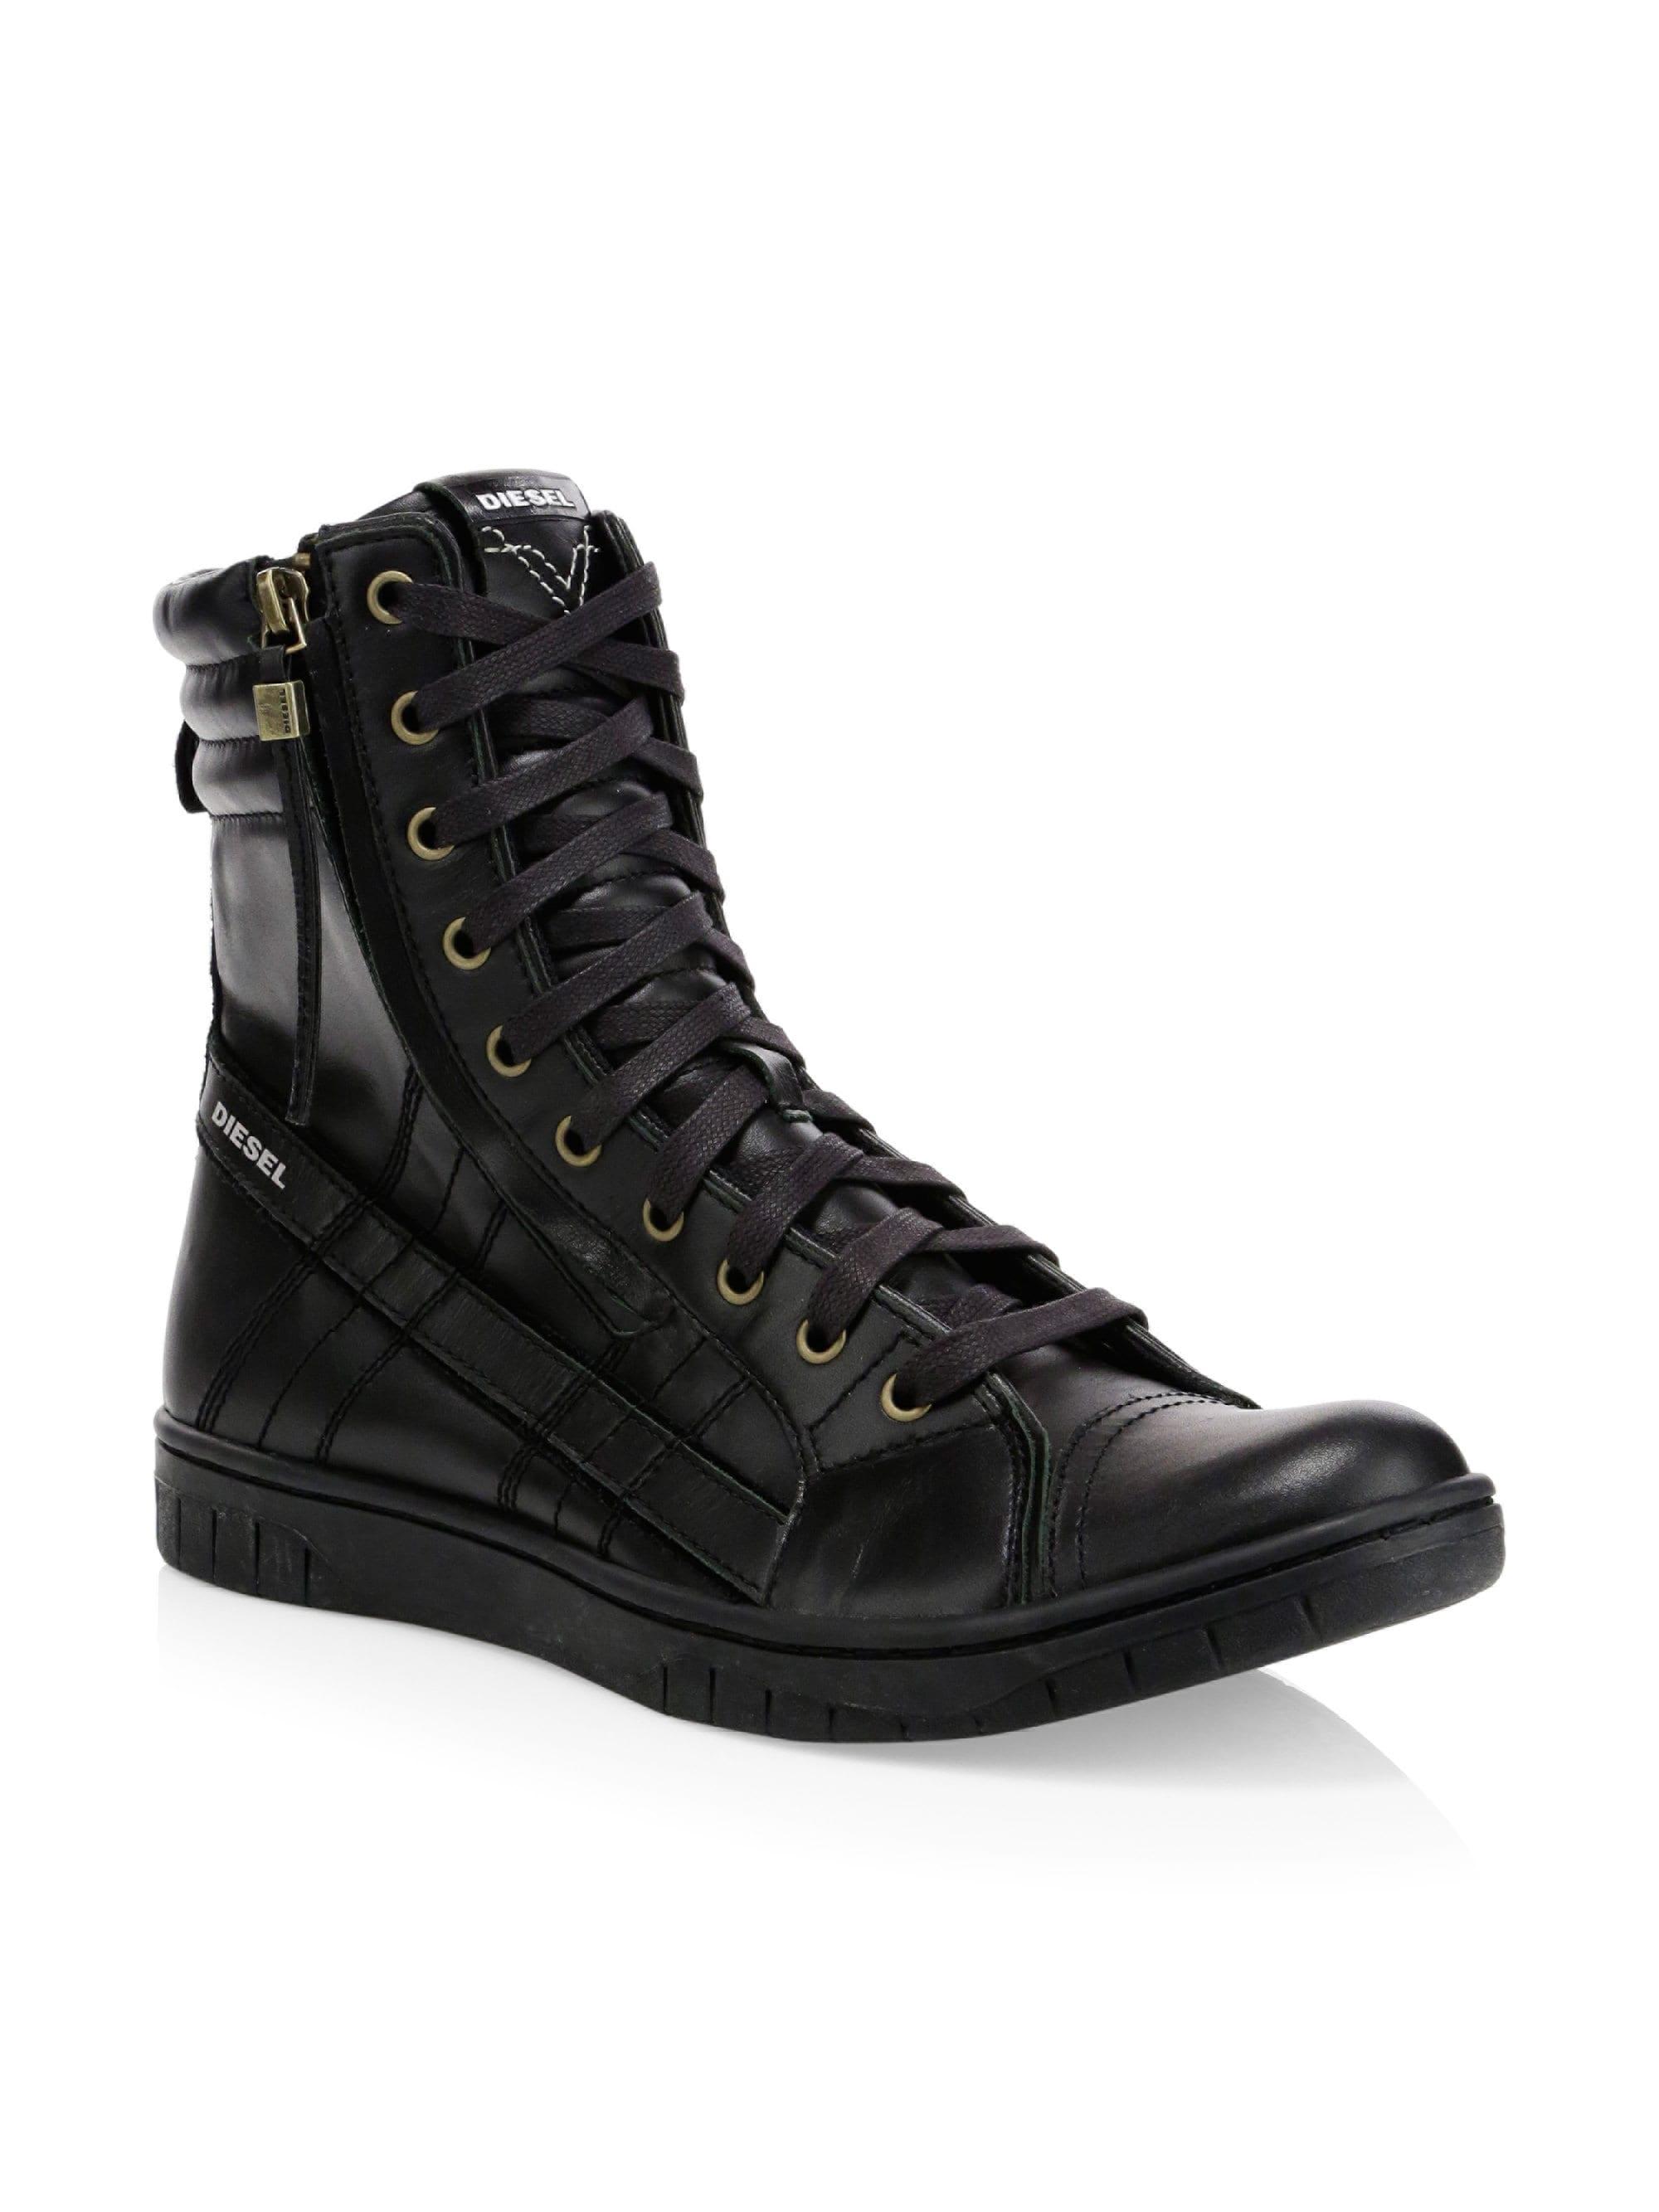 DIESEL Hybrid Leather Sneaker Boots in Black for Men - Lyst